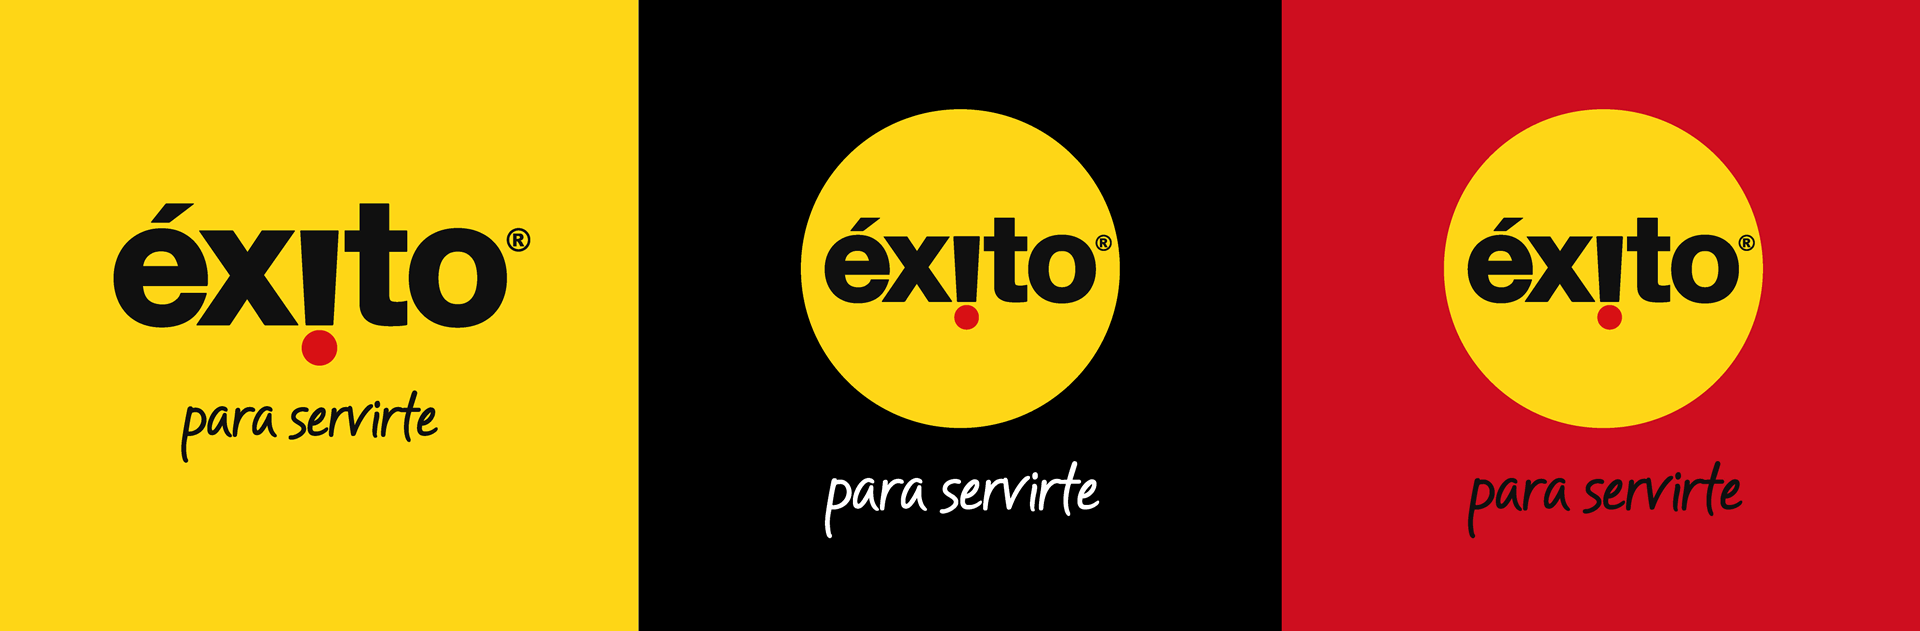 Almacenes Exito Logo PNG - 106868